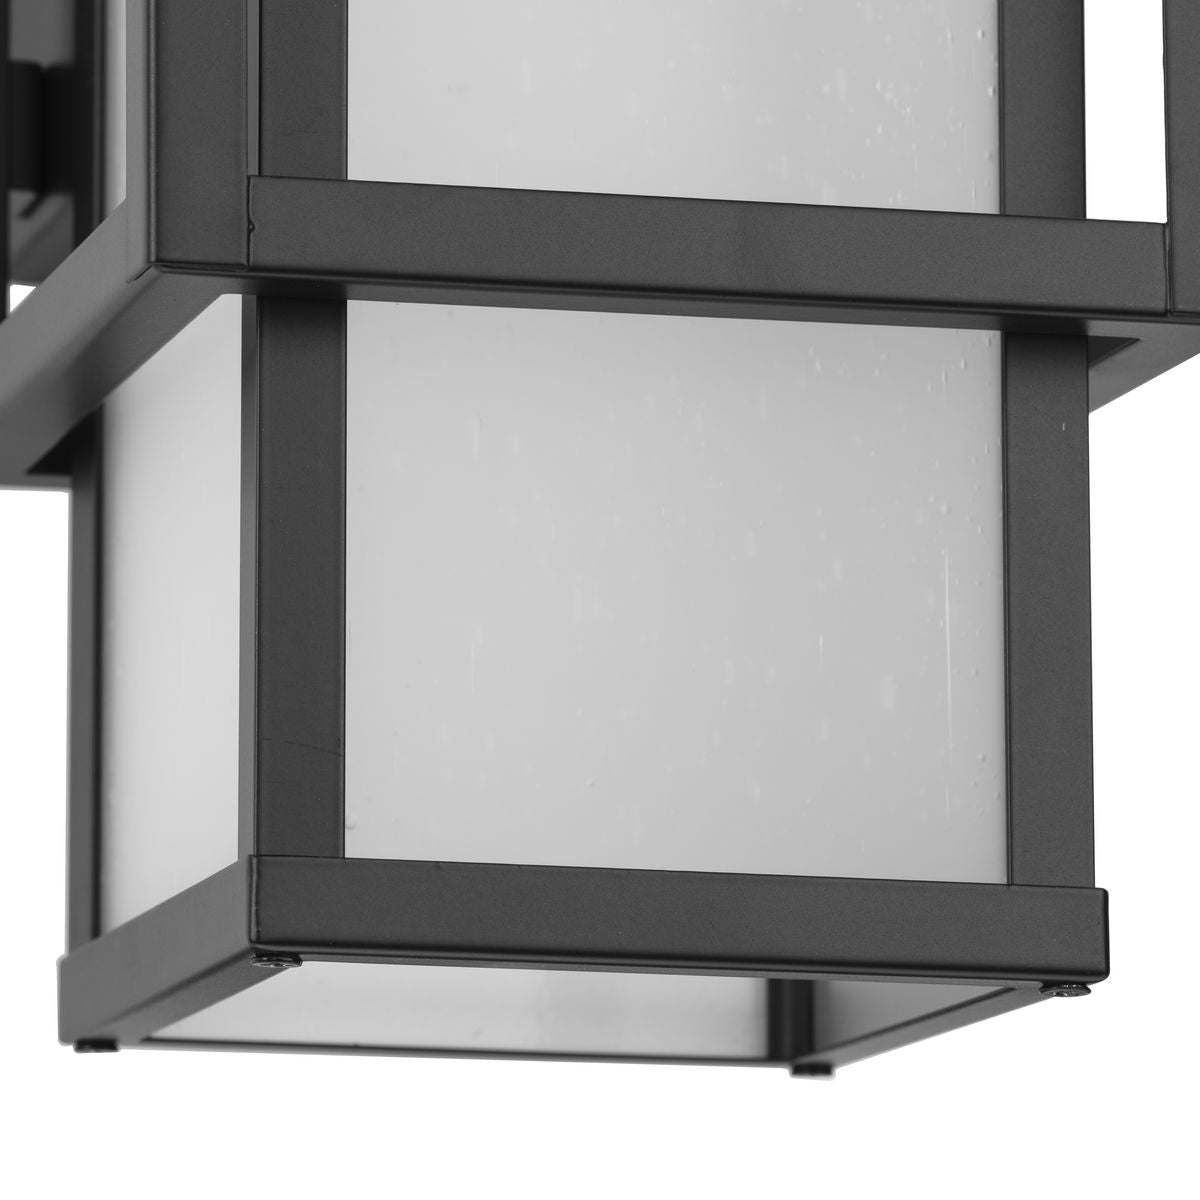 Unison 2-Light Outdoor Wall Light